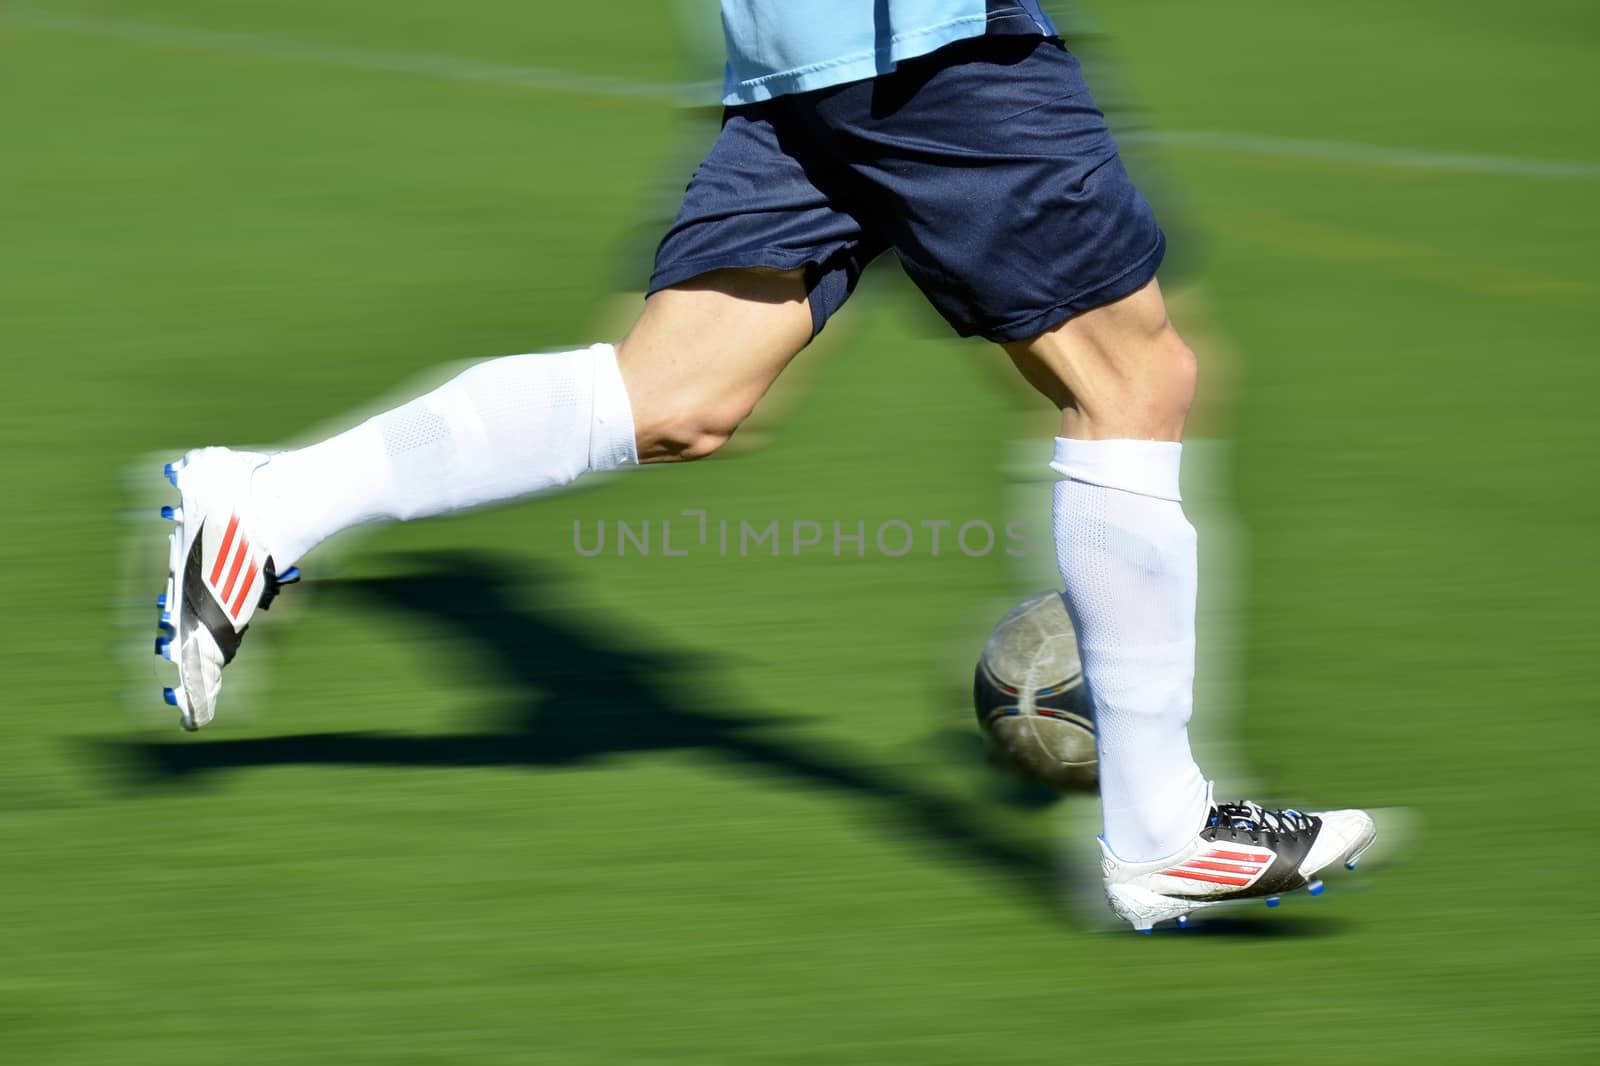 Soccer player running by alentejano